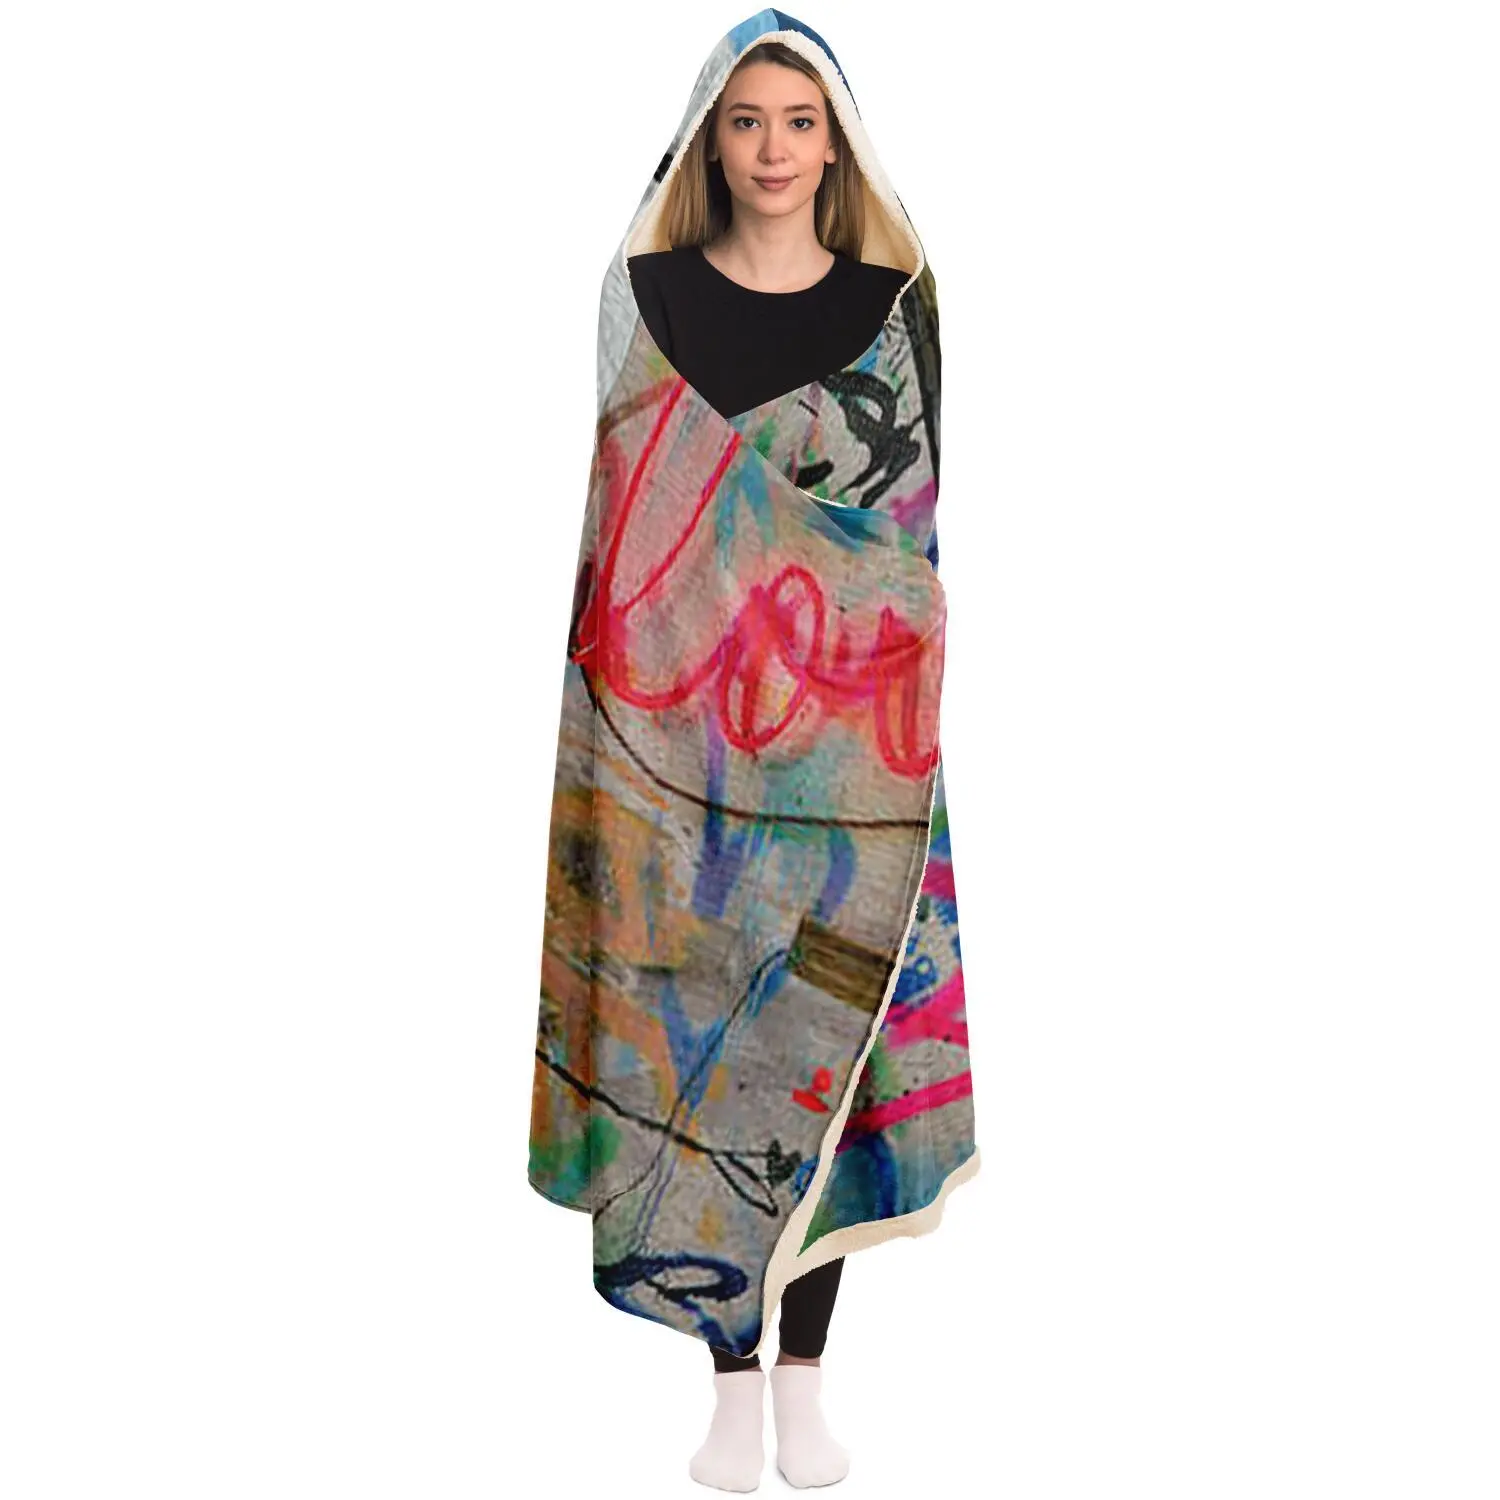 Griet Street Art Hooded Blanket